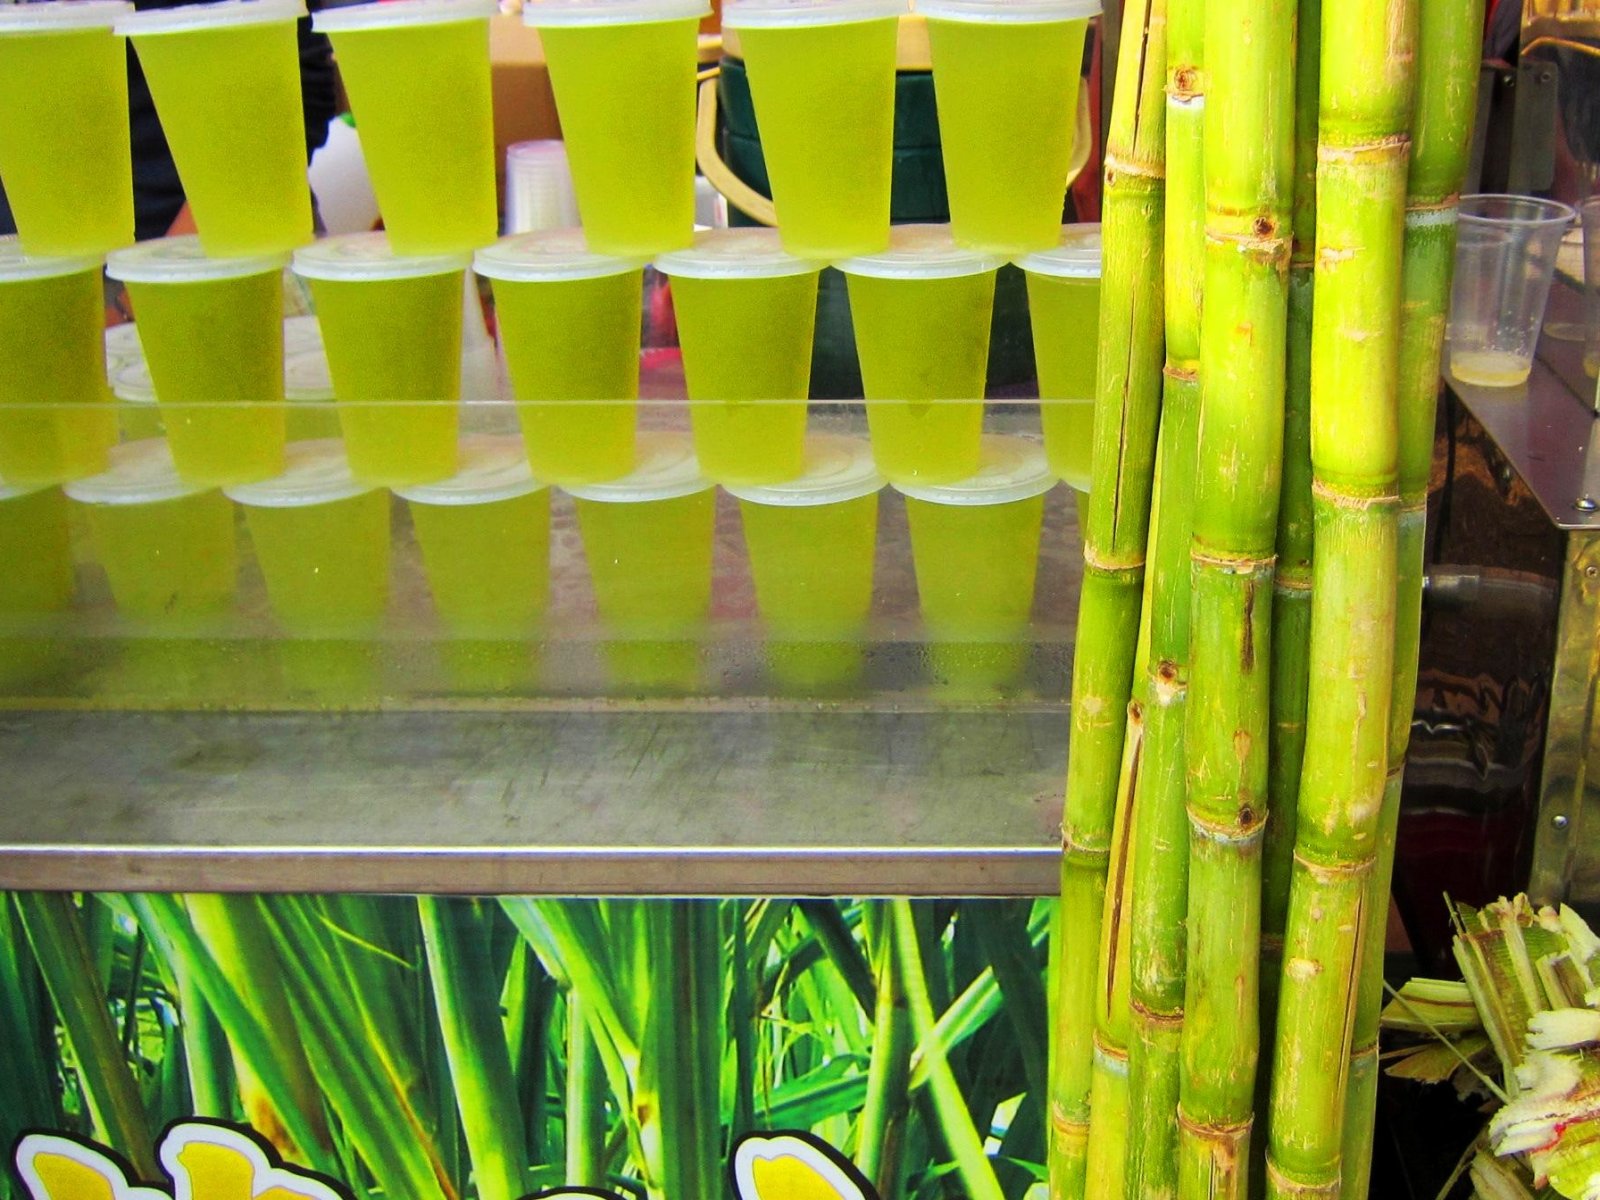 How to try sugarcane fresh in Phuket